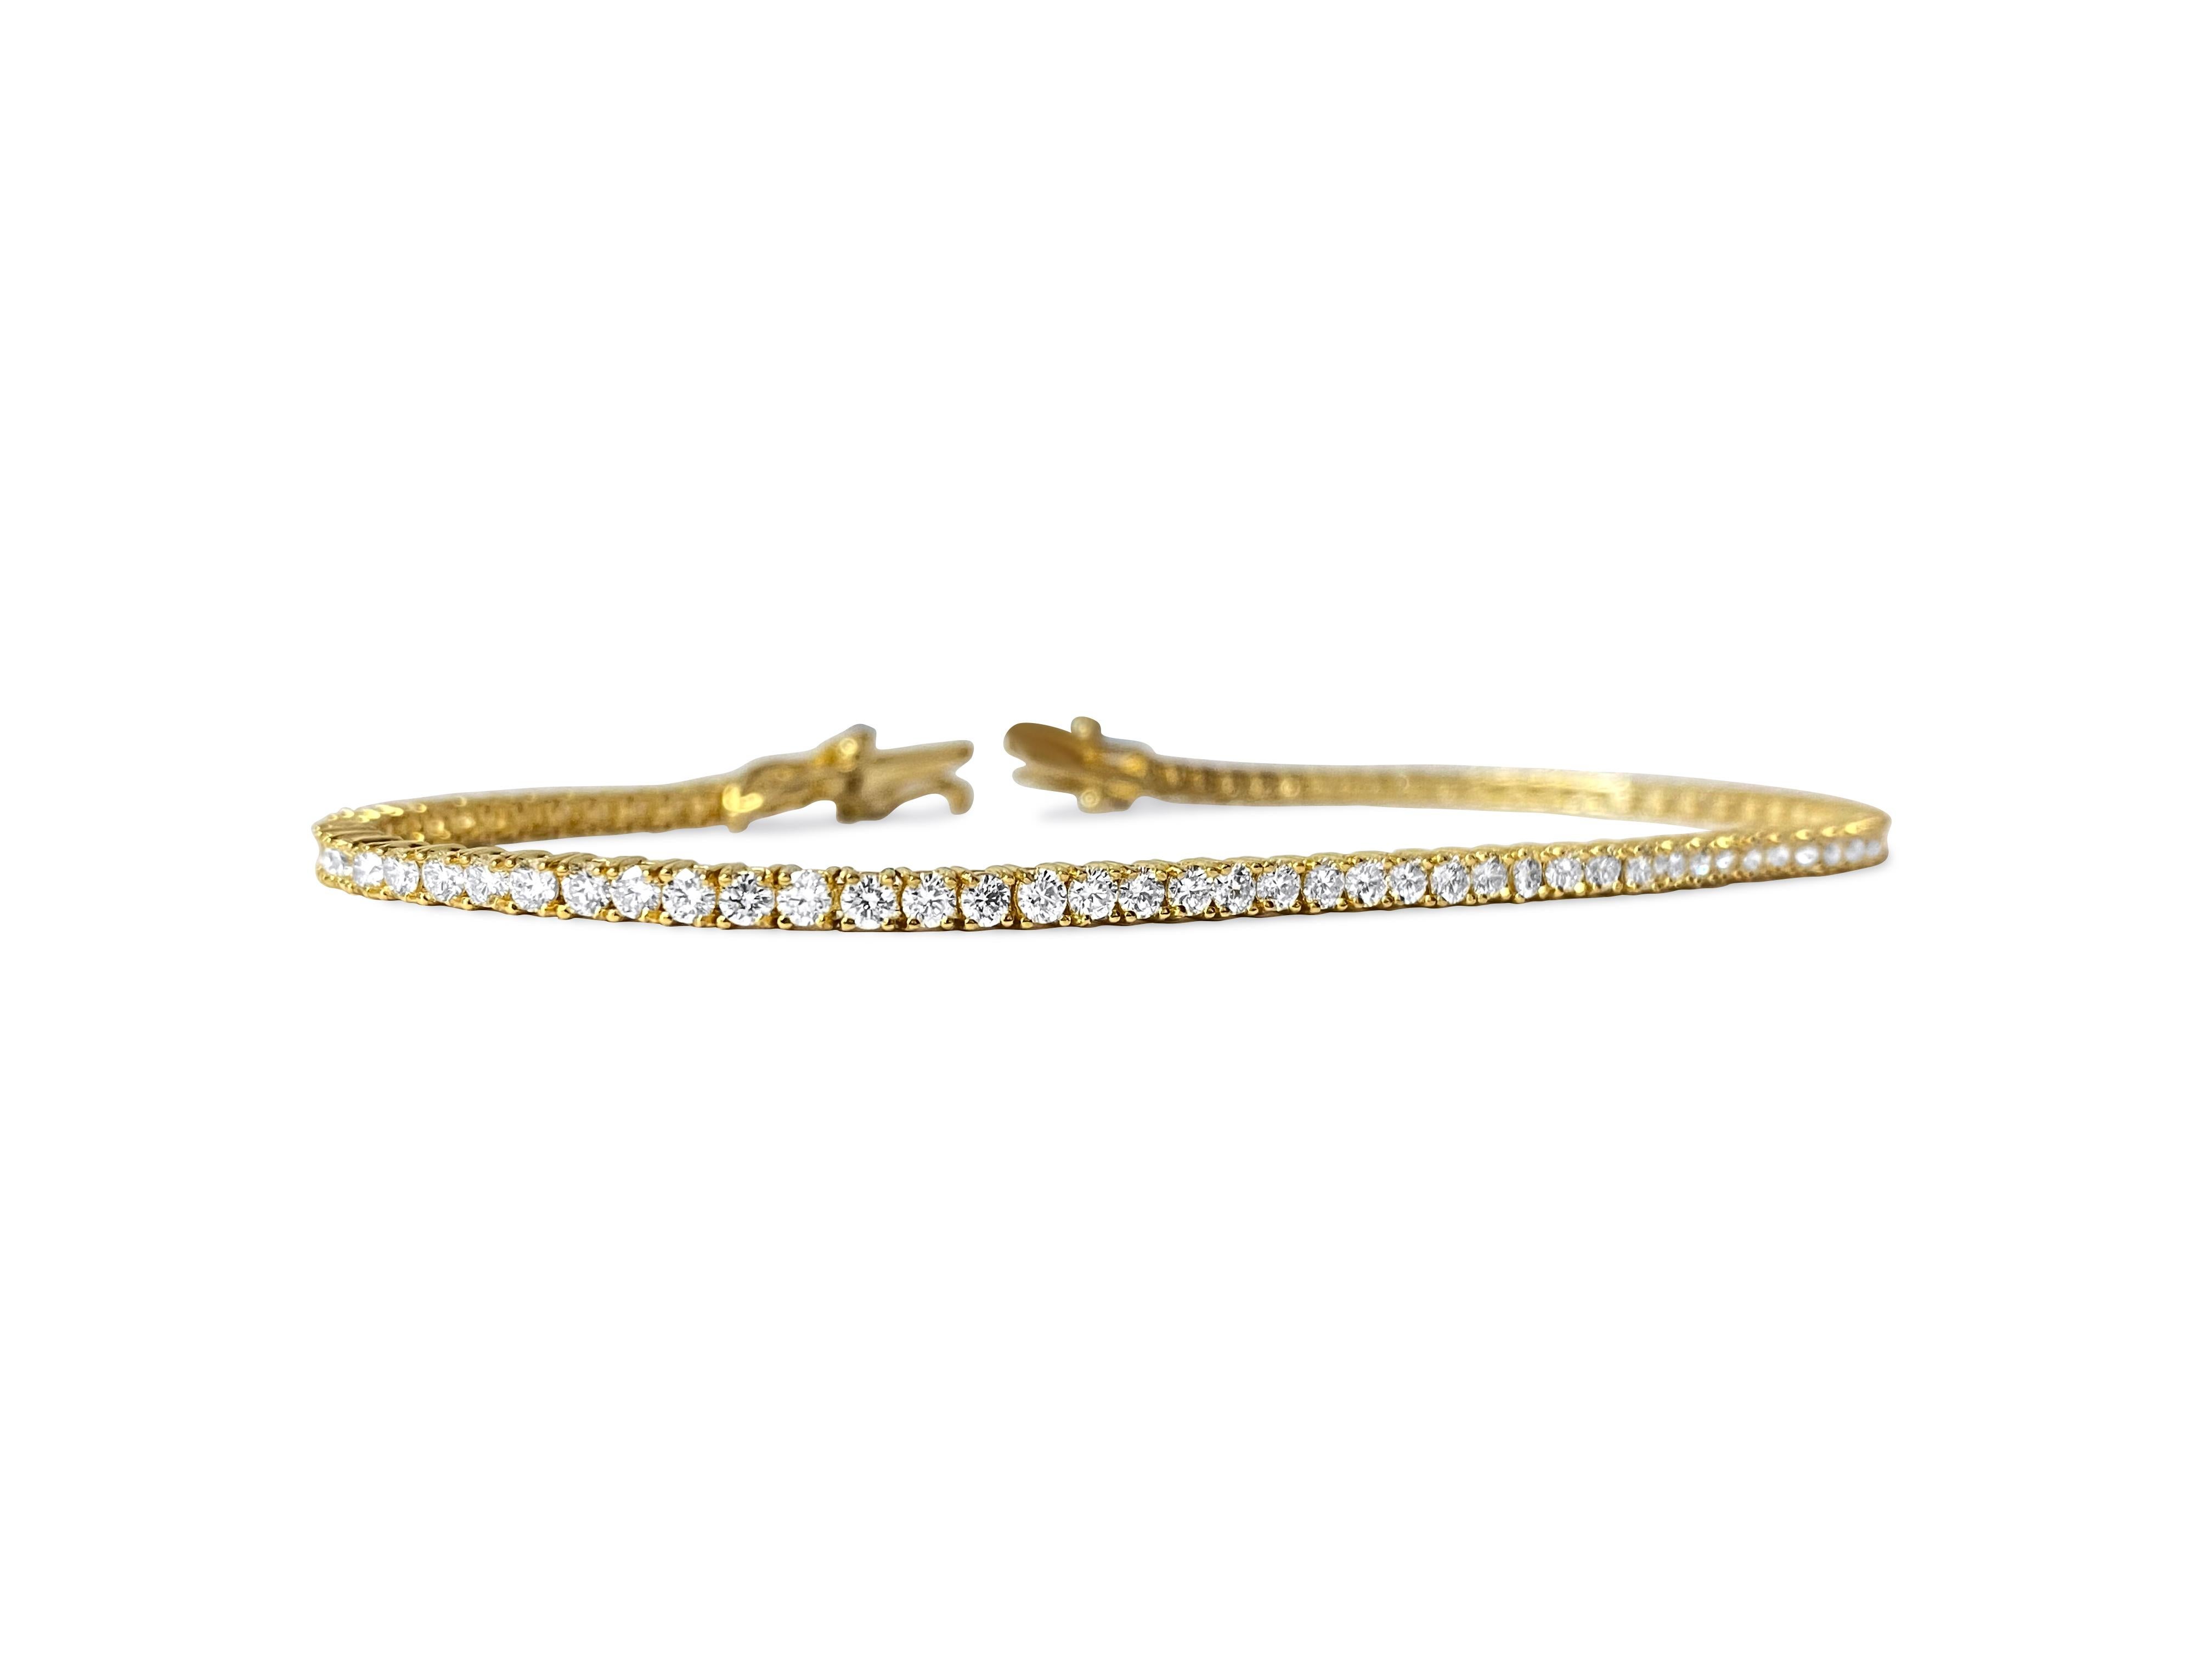 10k gold cz tennis bracelet